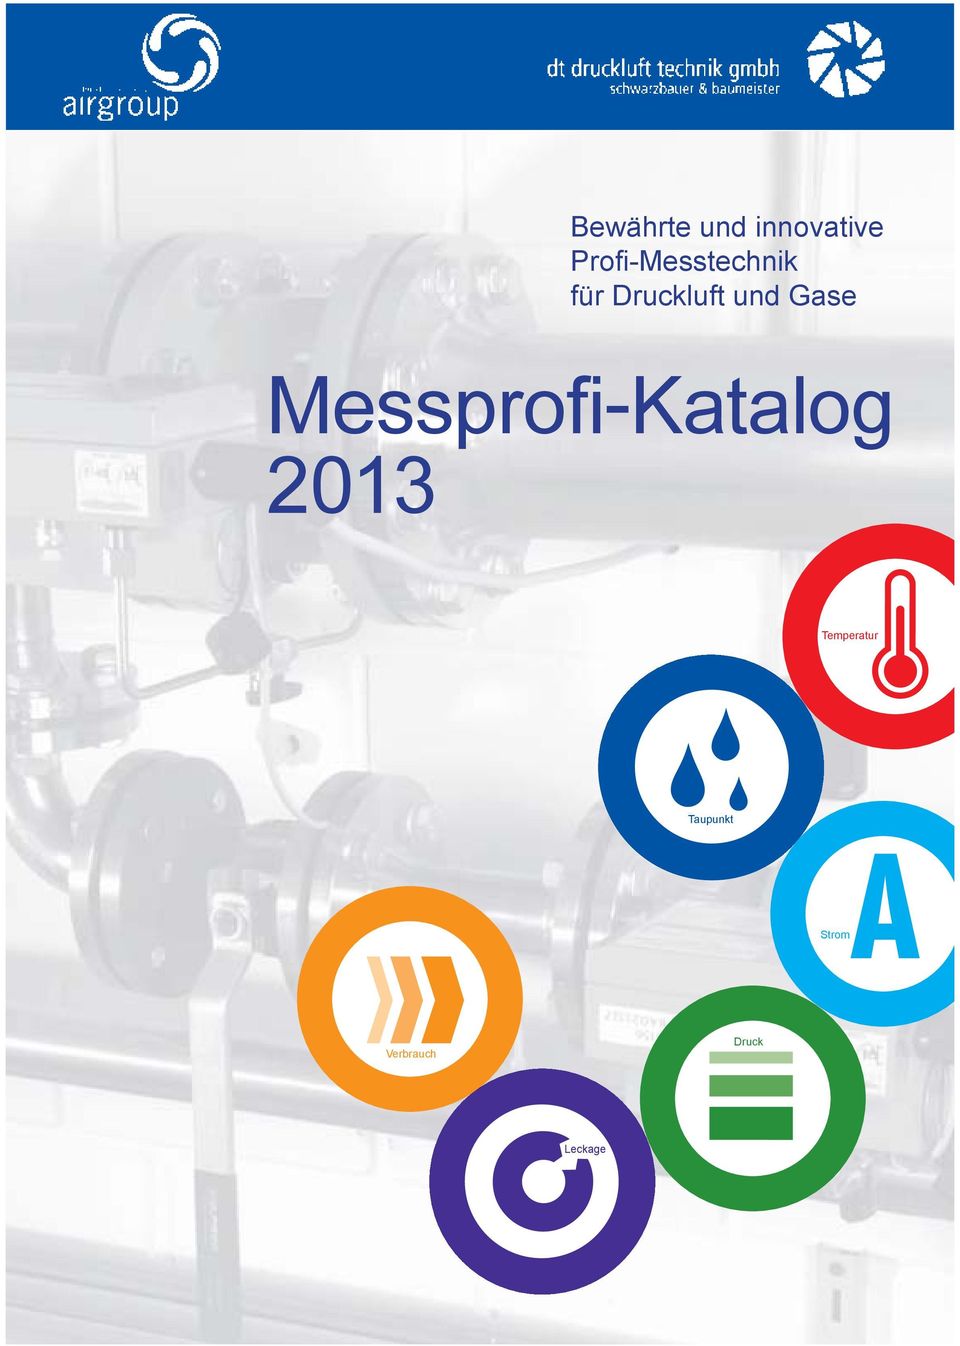 Gase Messprofi-Katalog 2013 ckluft